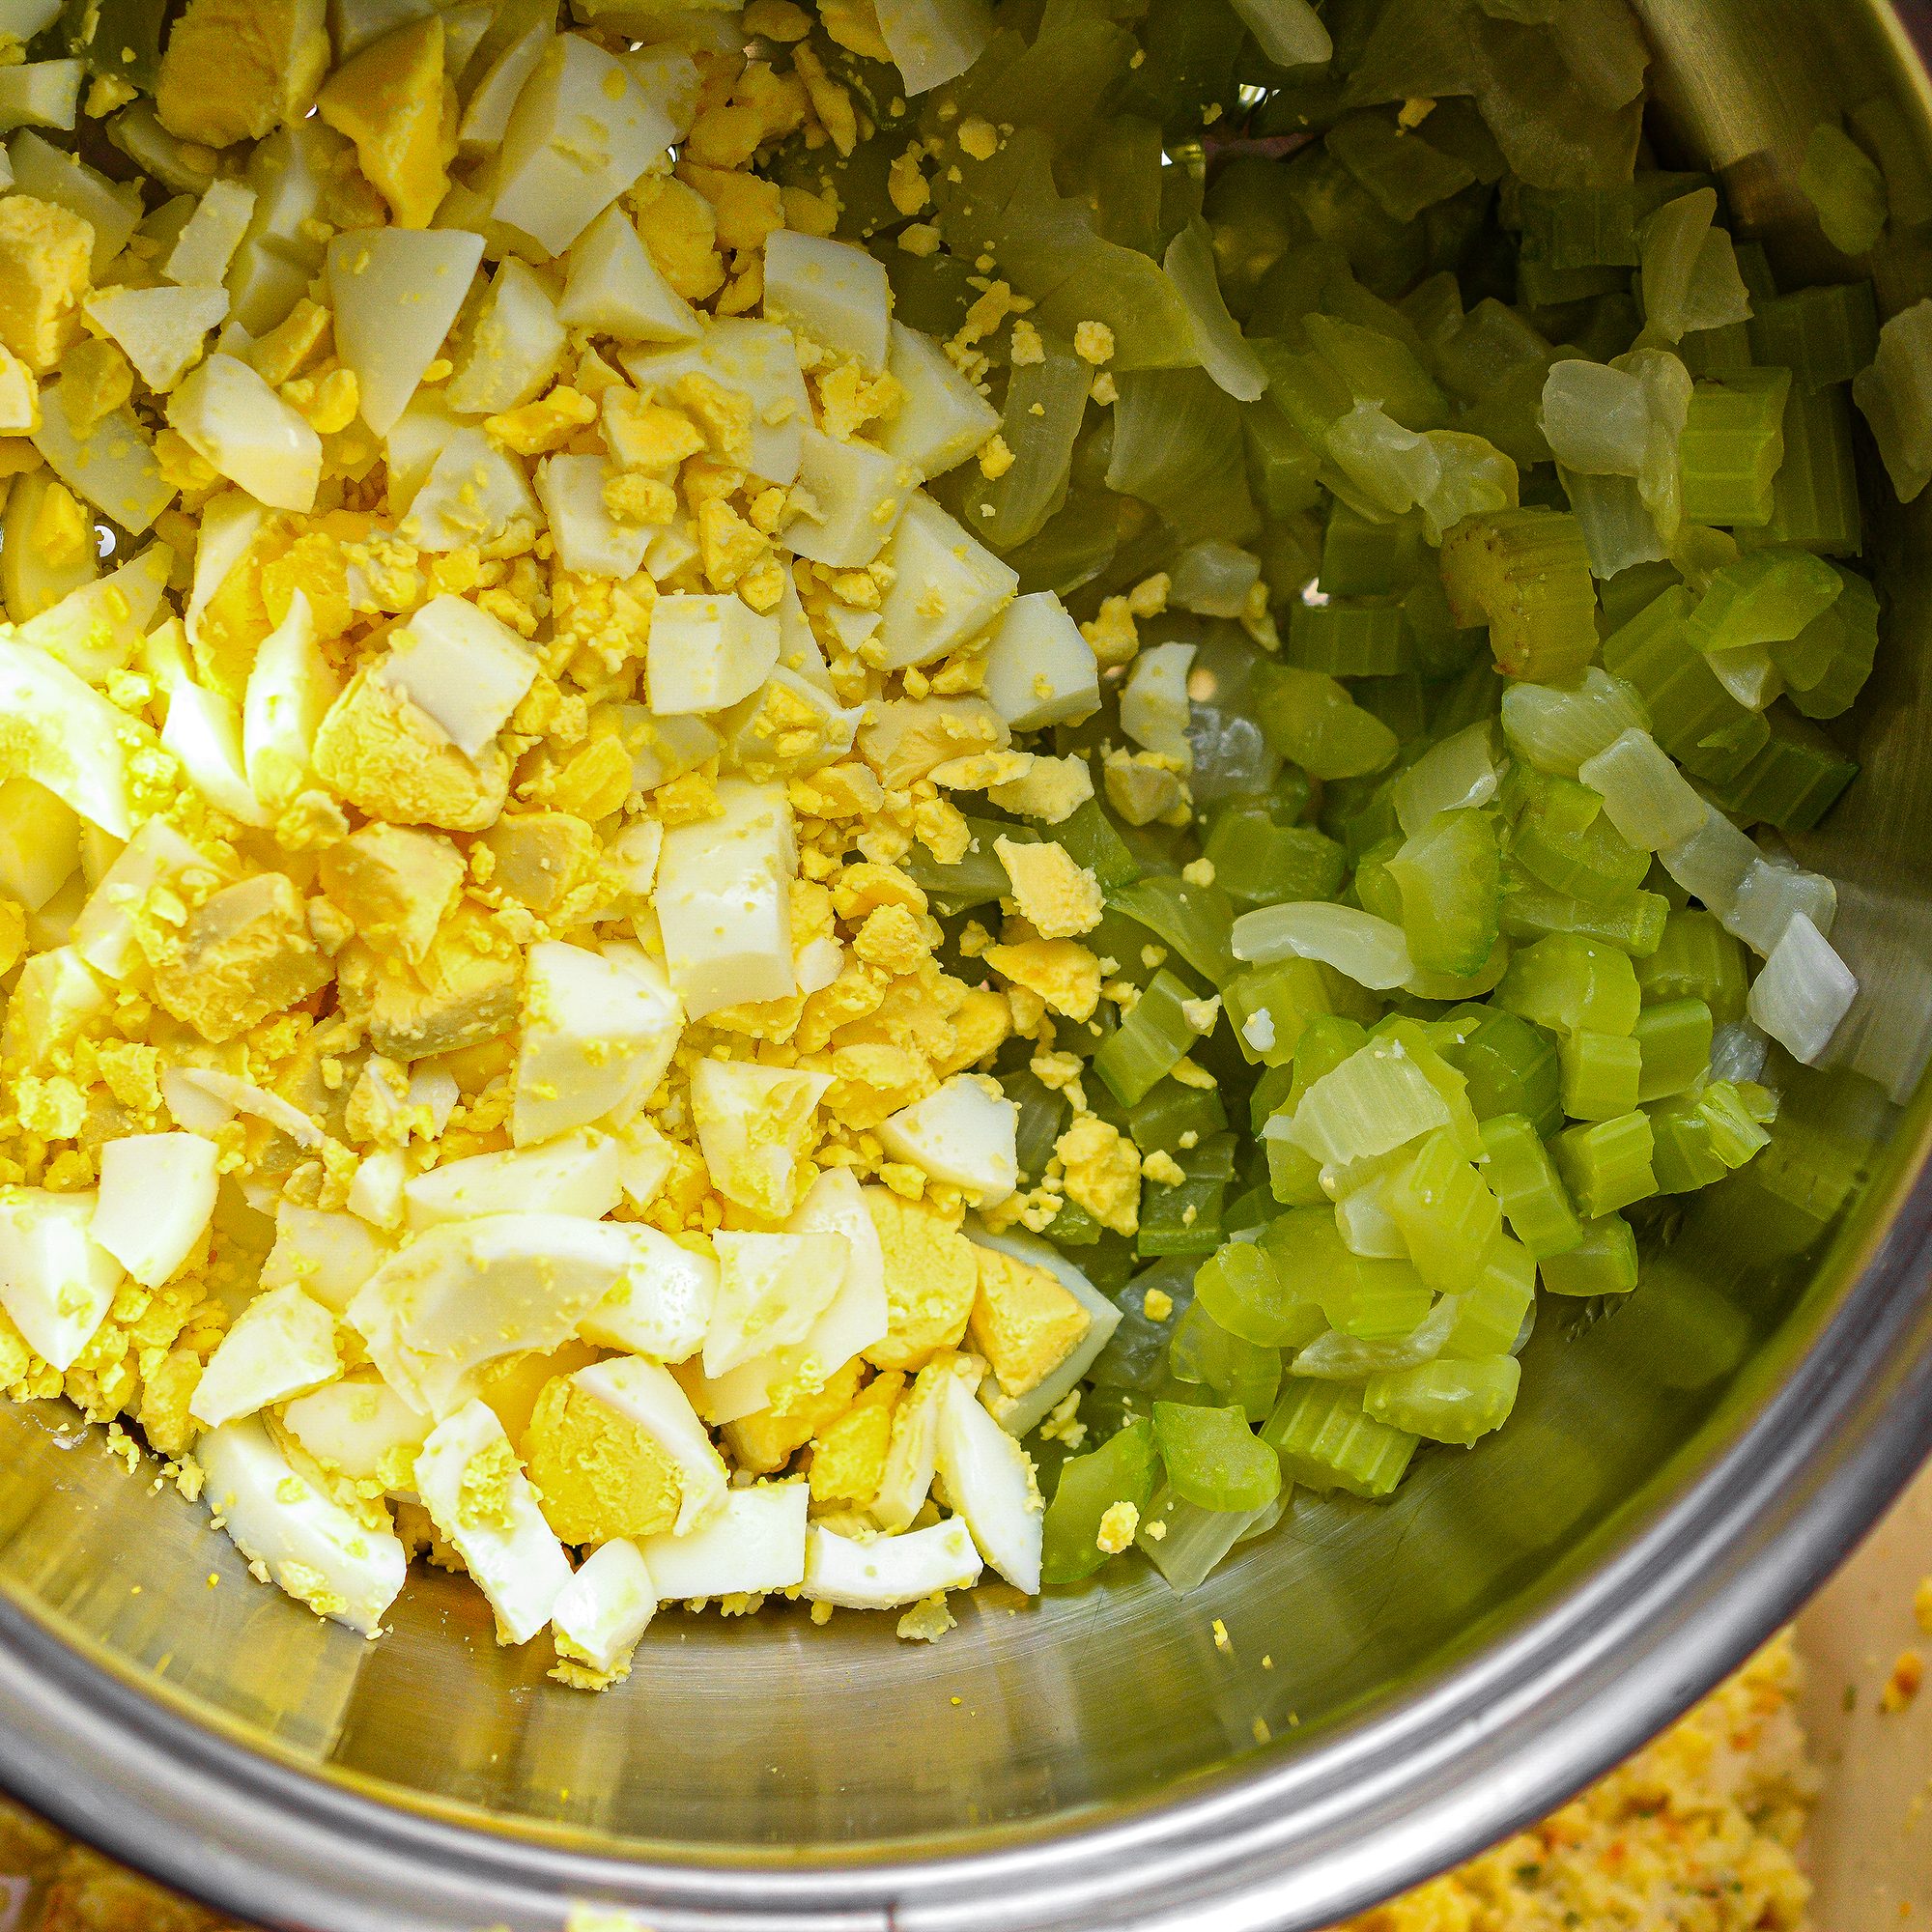 Adding onion, celery, chopped eggs